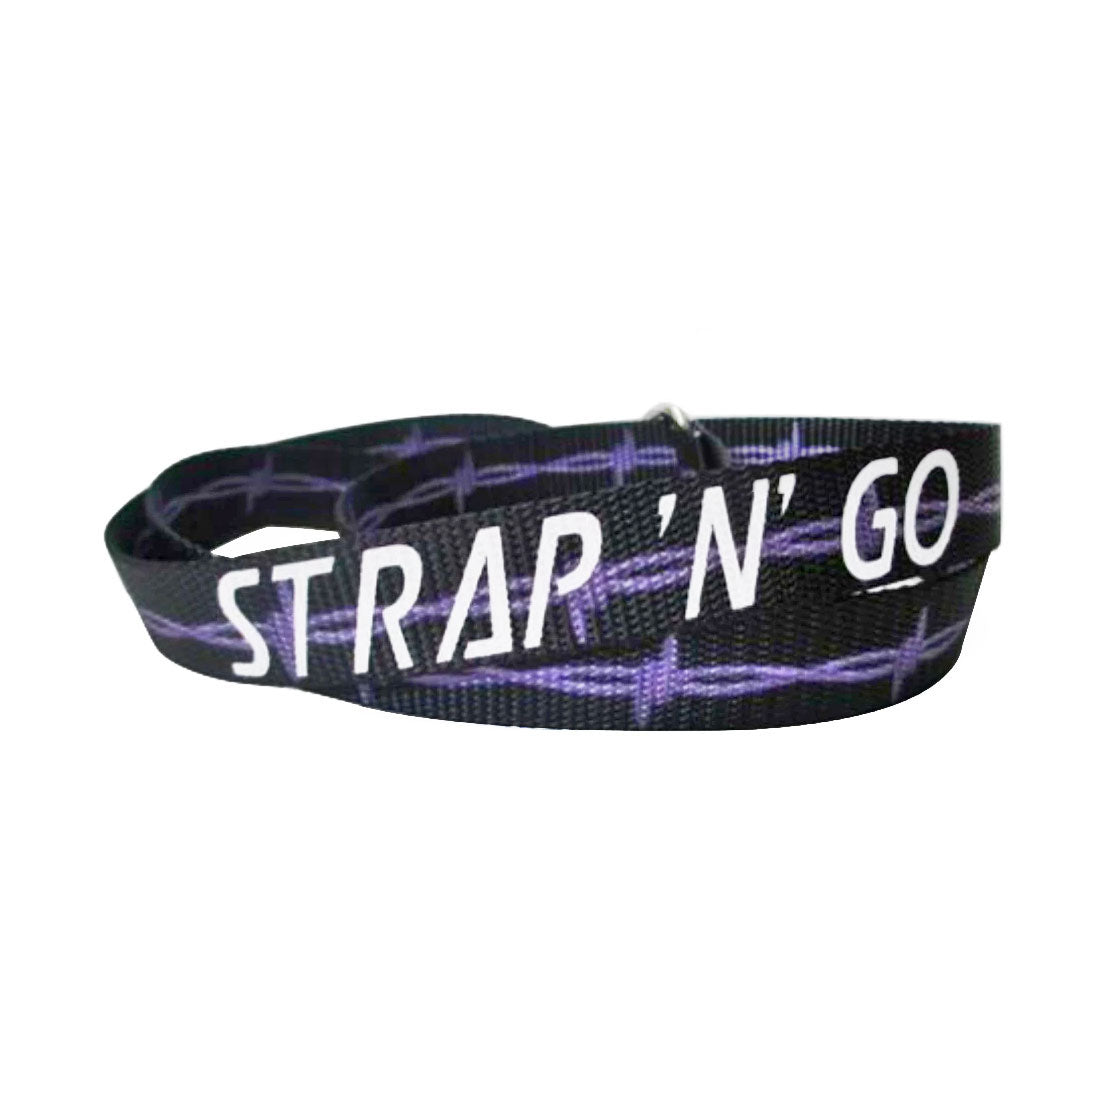 Strap N Go Skate Noose/Leash - Patterns Barbed Wire Roller Skate Accessories